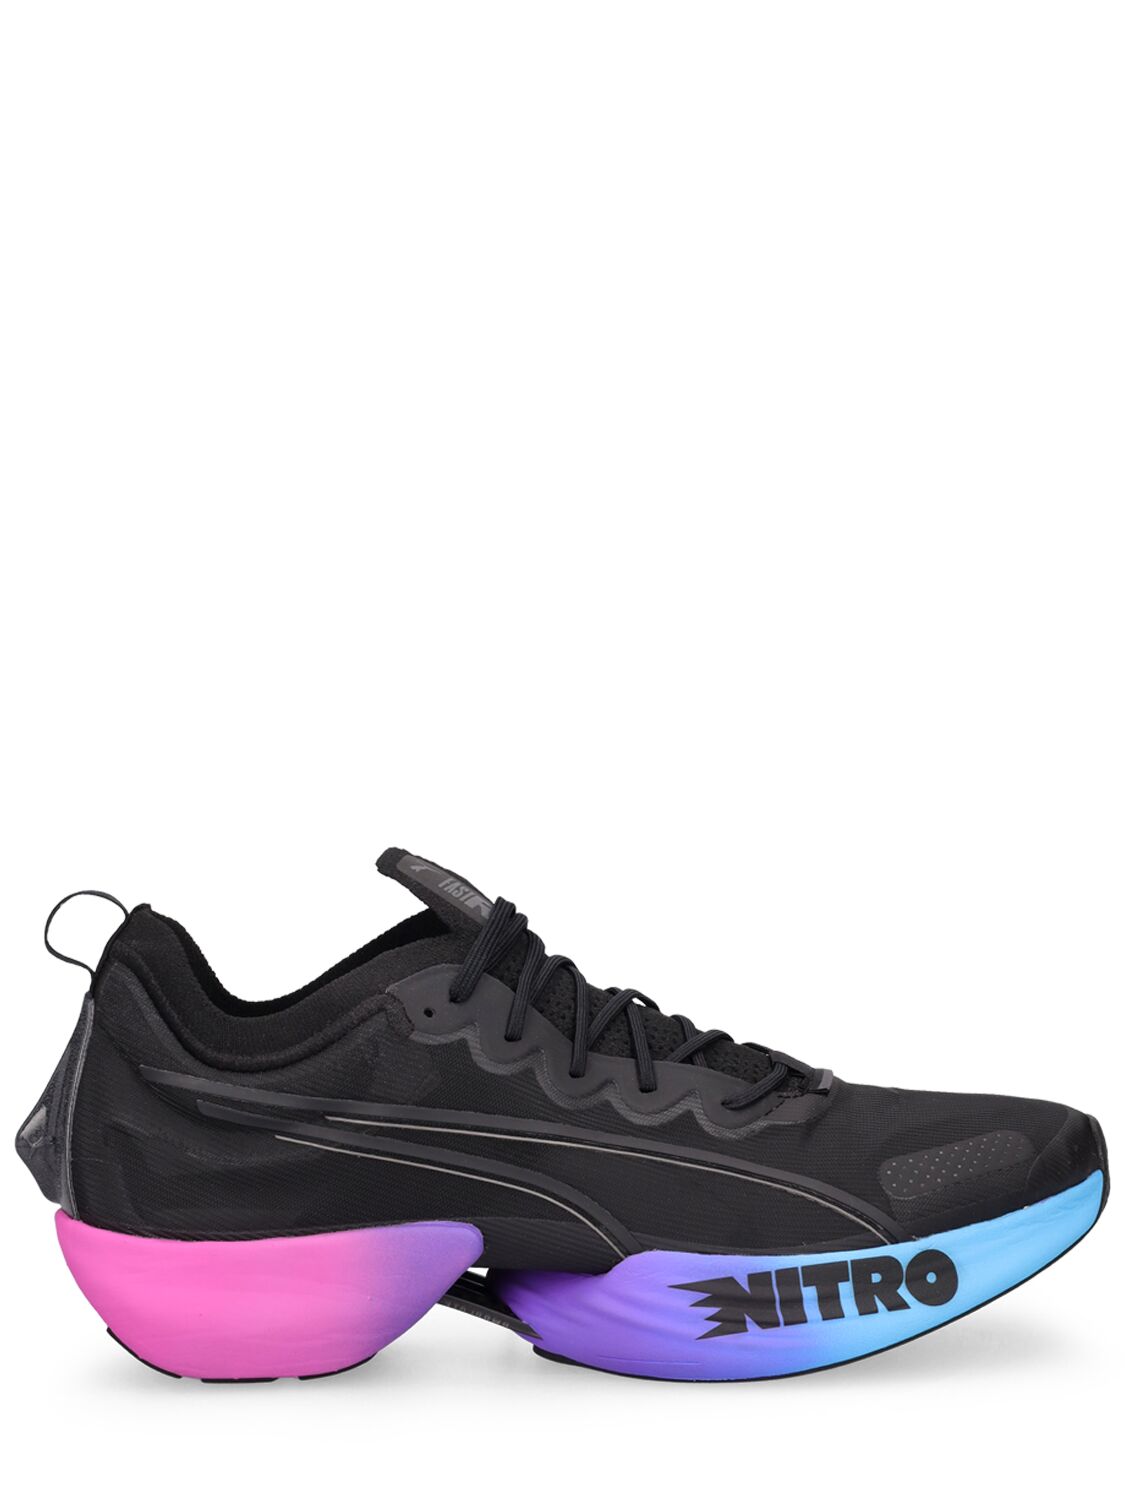 Fast-r Nitro Elite Sneakers